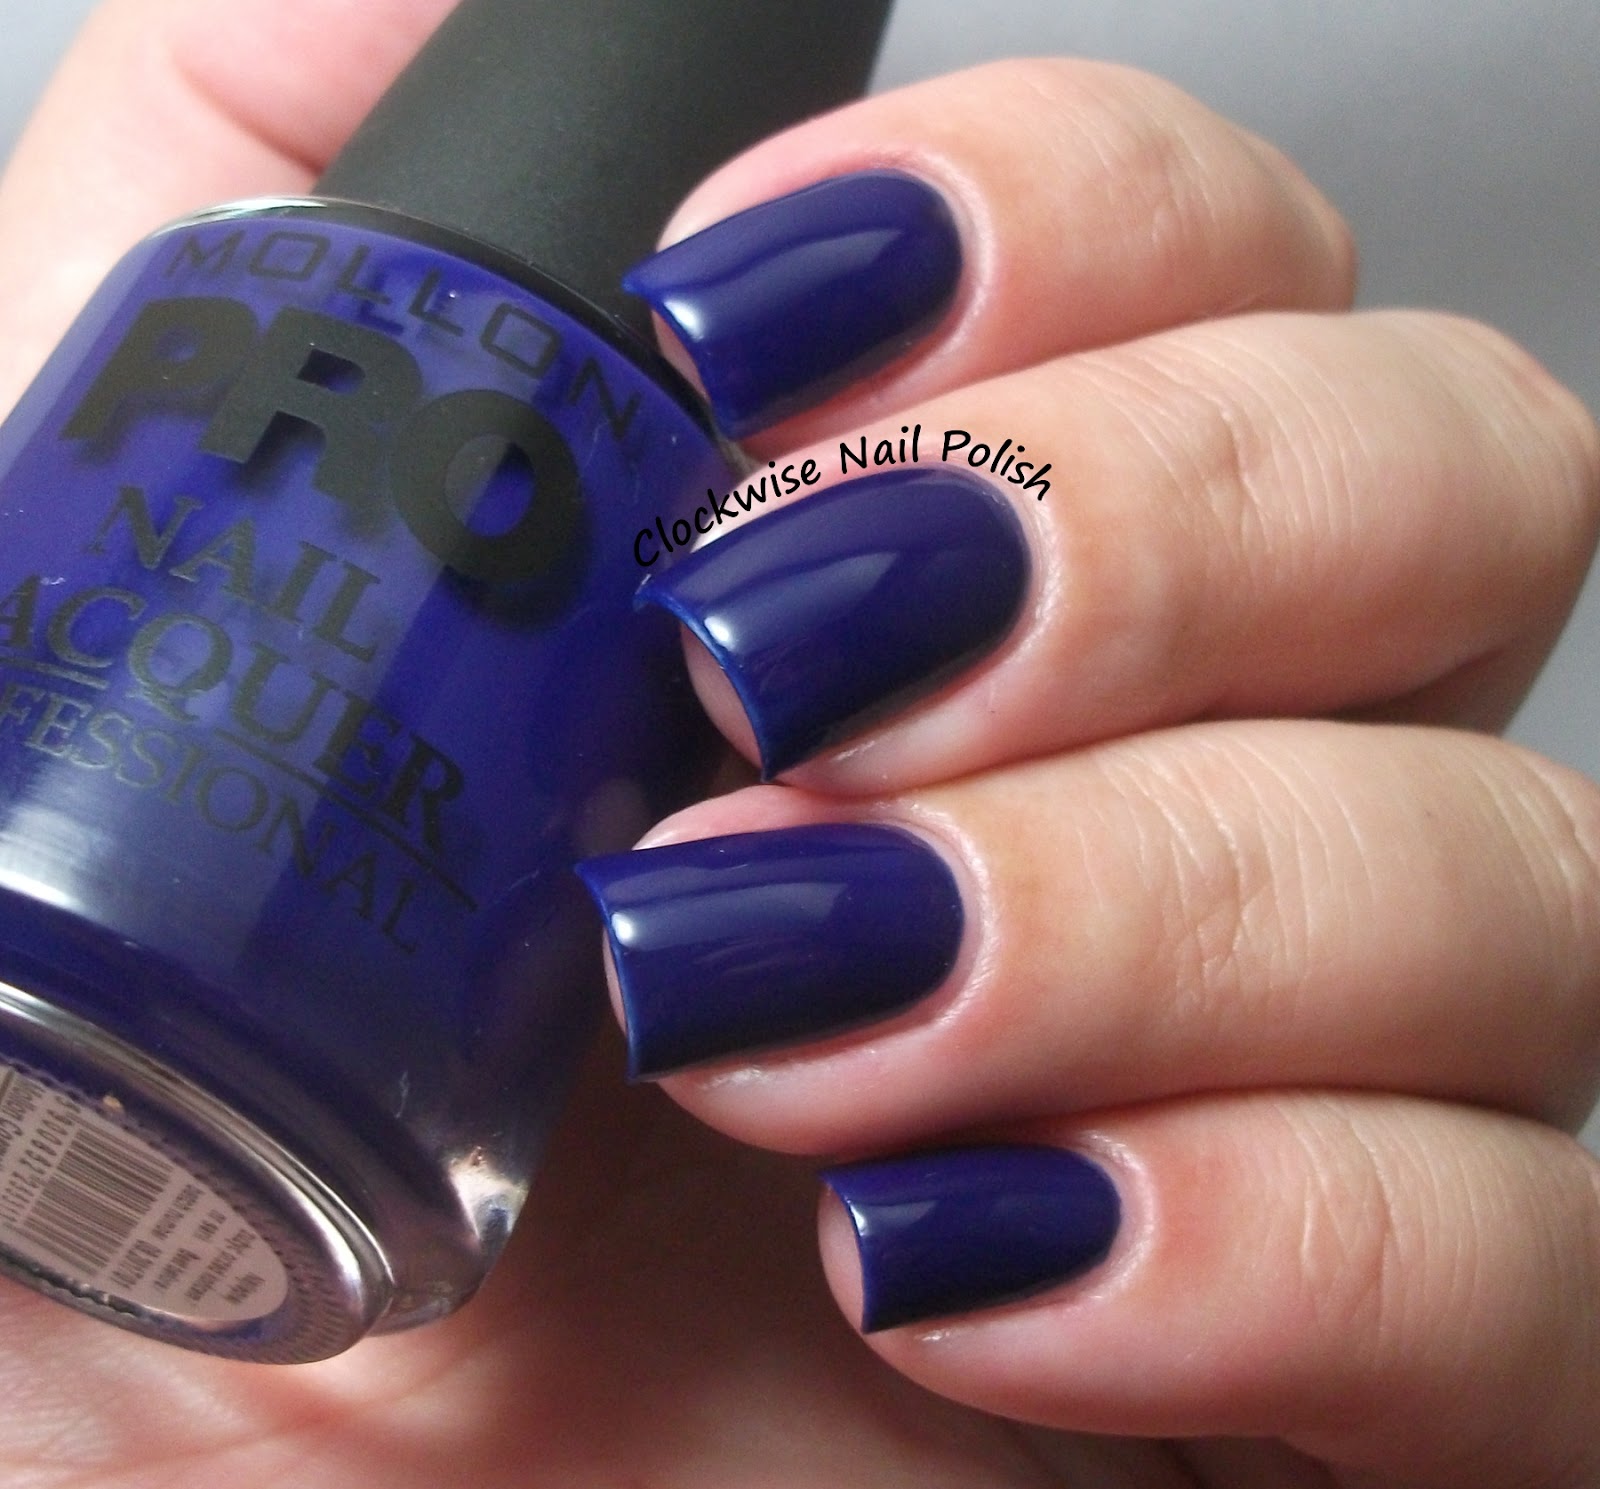 The Clockwise Nail Polish: Mollon Pro 195 Blue Beryl Review & In Beauty ...